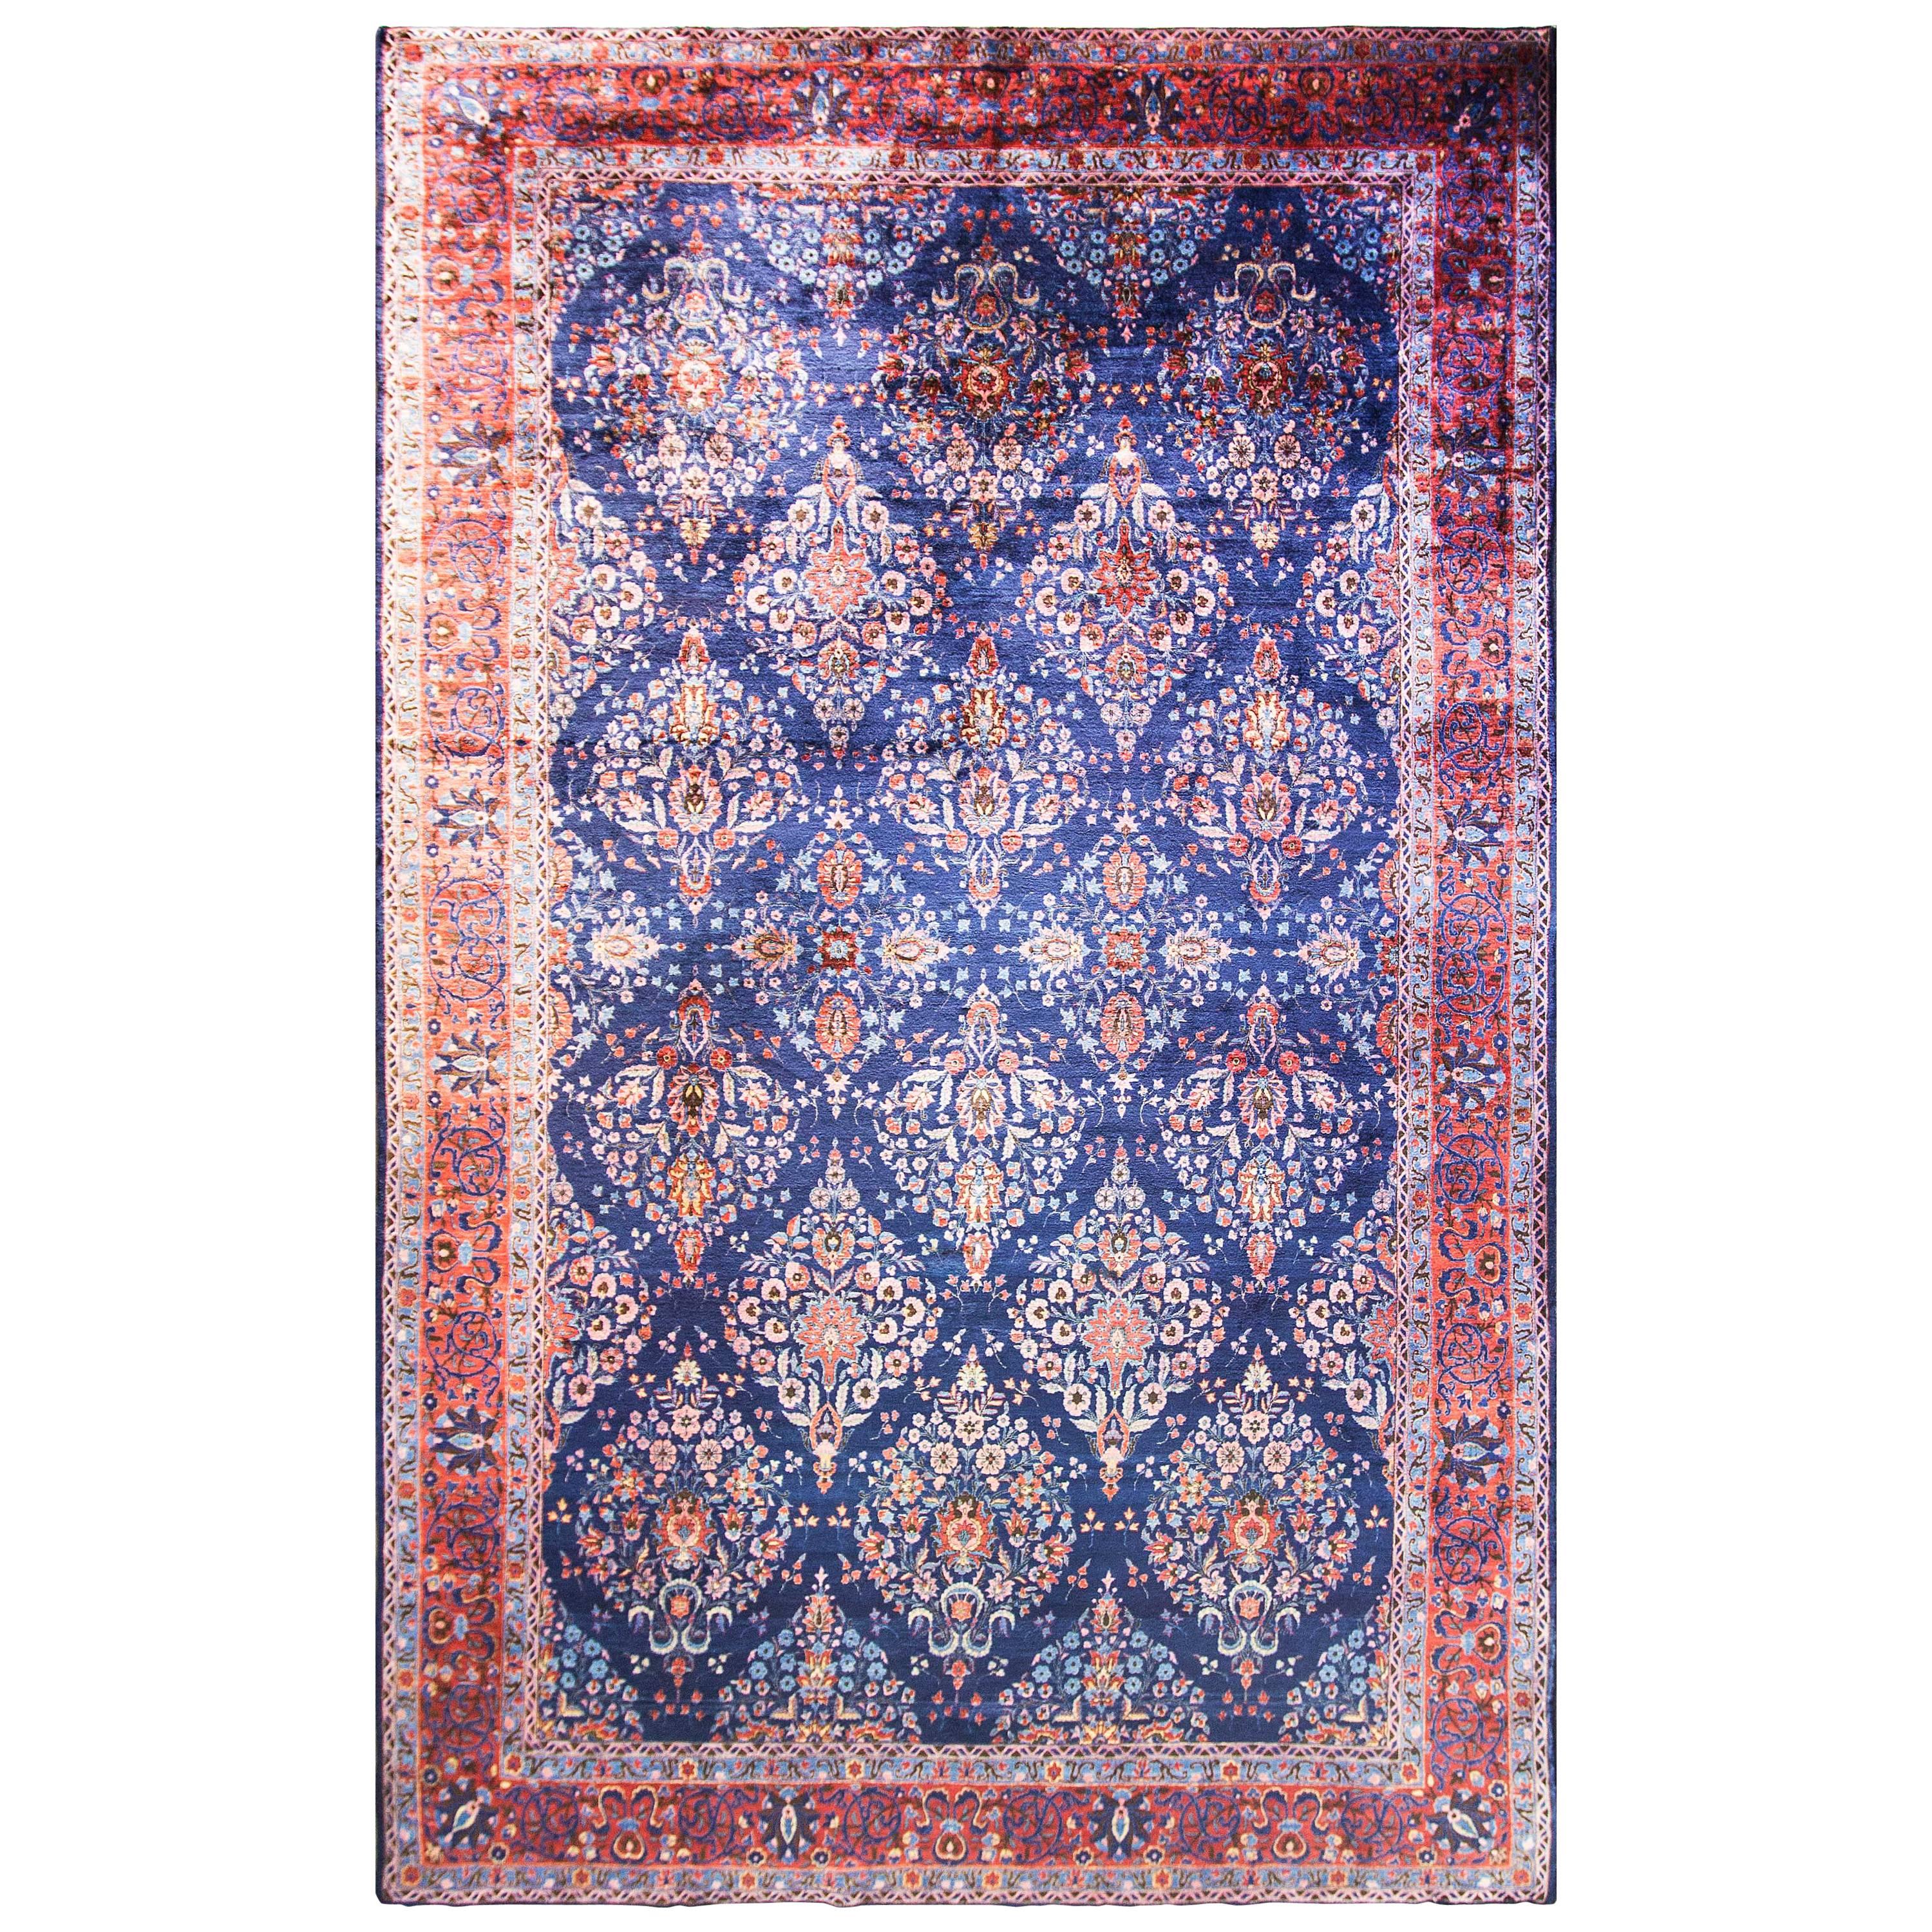 Antique Fine Persian Manchester Wool Kashan Carpet